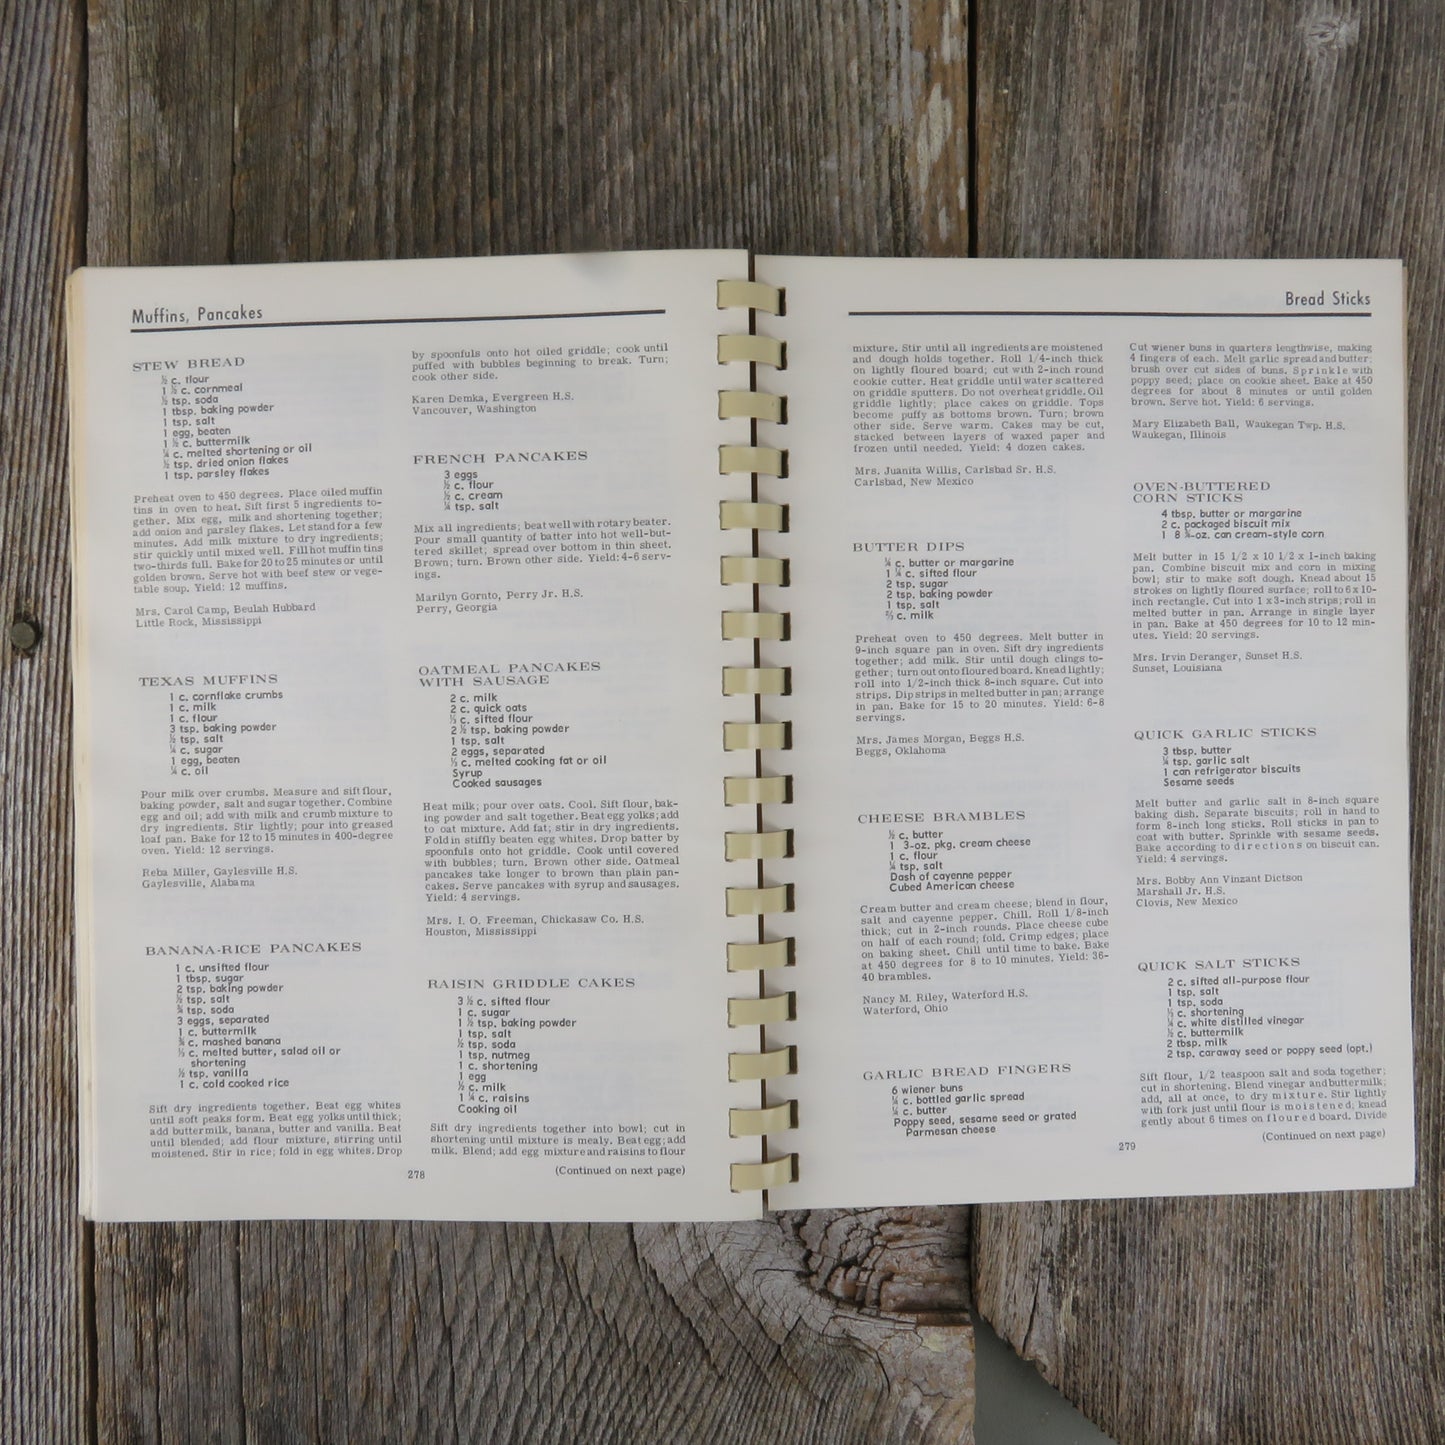 Our Favorite Casseroles Cookbook Vintage Favorite from Home Economics Teachers 1969 2000 Favorites - At Grandma's Table